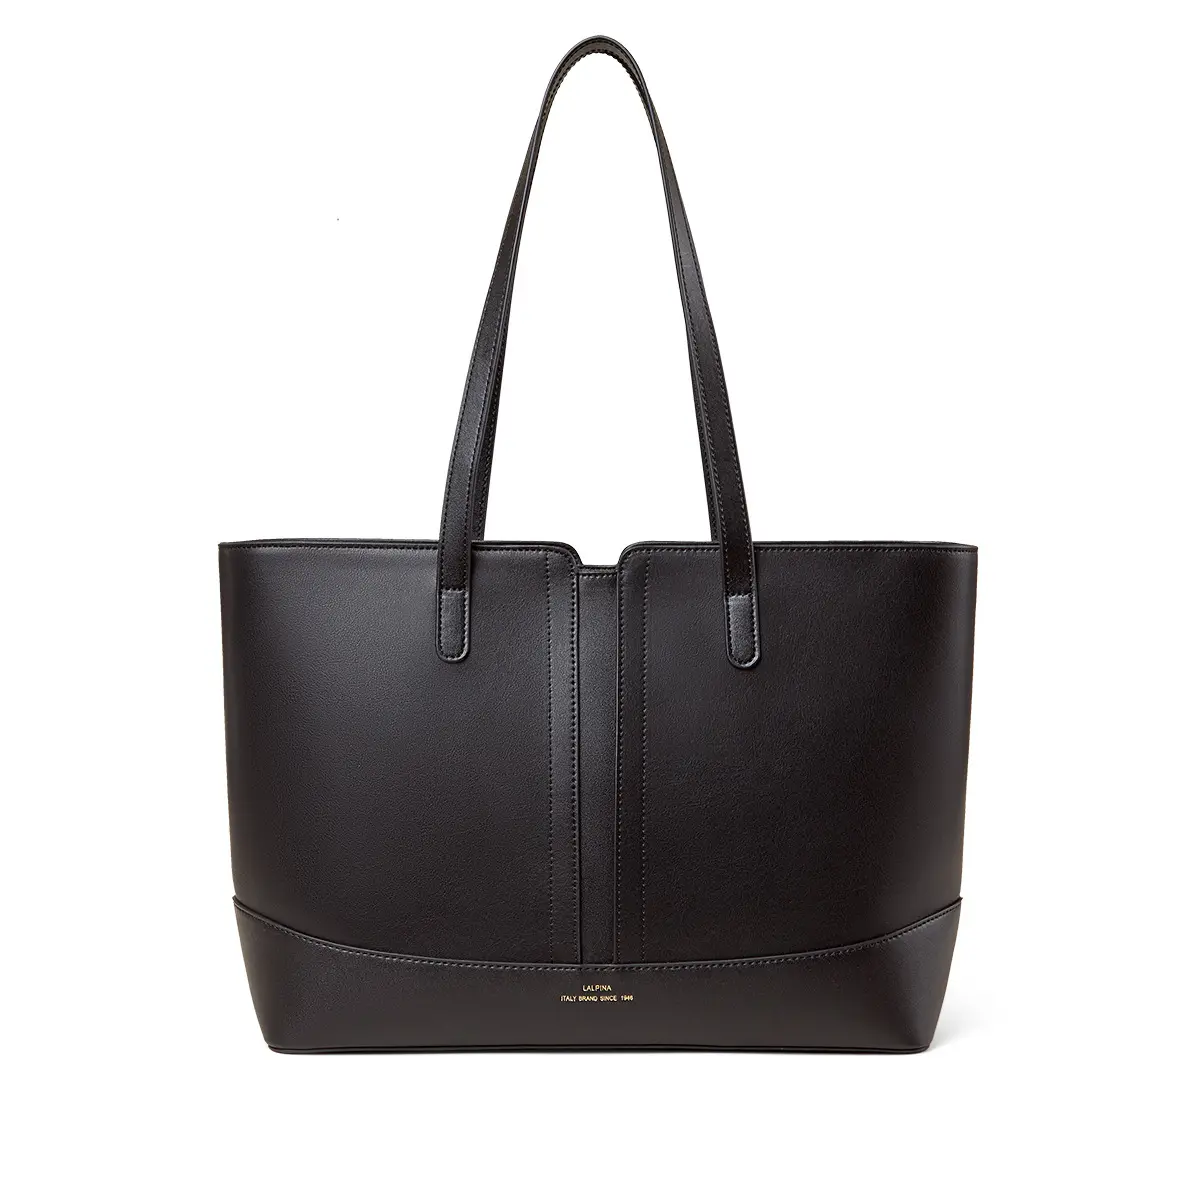 New luxury Large Tote Bag GENUINE Leather Women's Bag Classic Versatile Shoulder Bag Fashion Handbag Casual